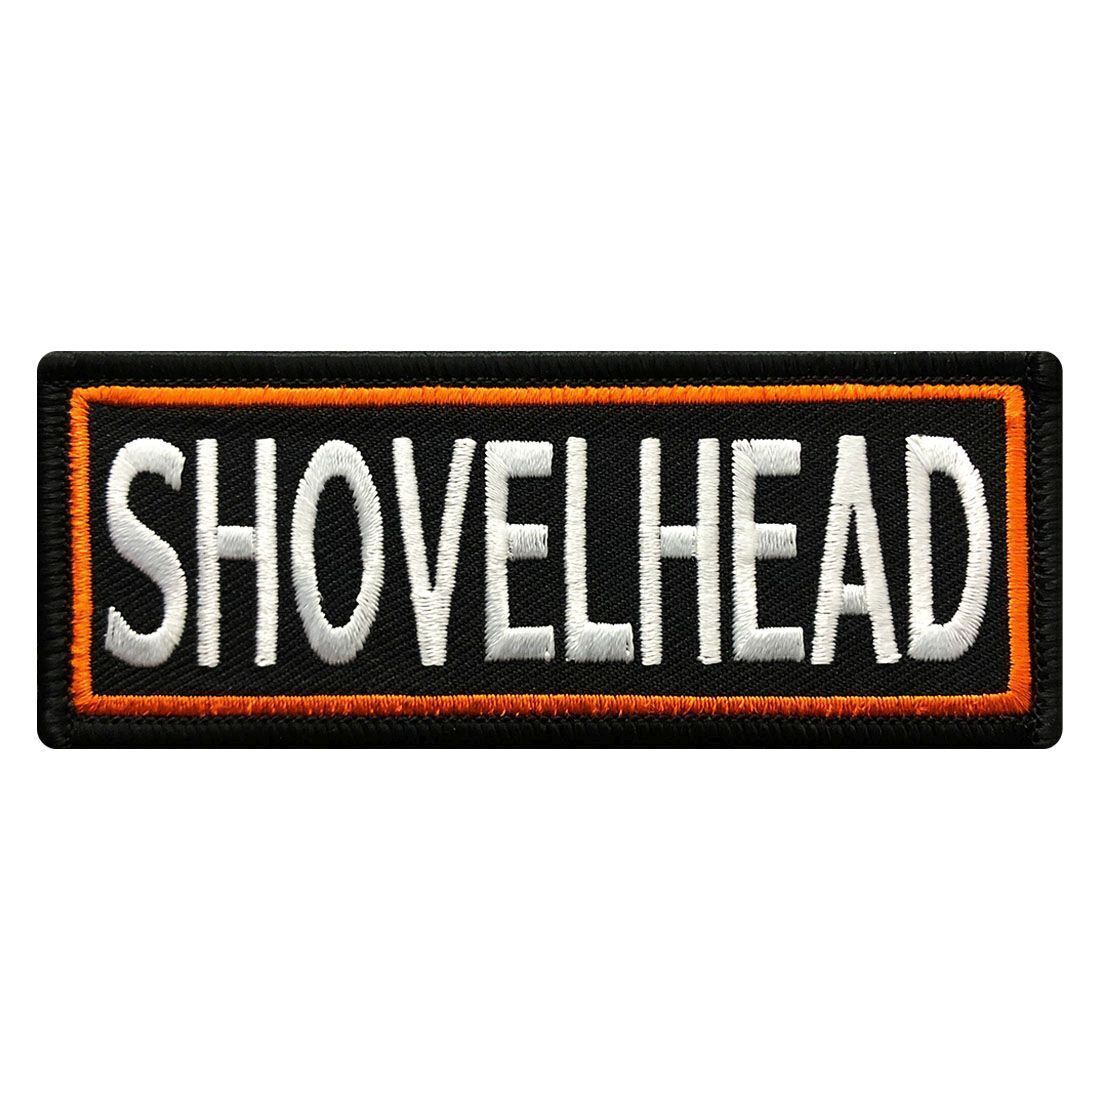 HARLEY DAVIDSON Shovelhead Embroidered Biker Patch 4.0